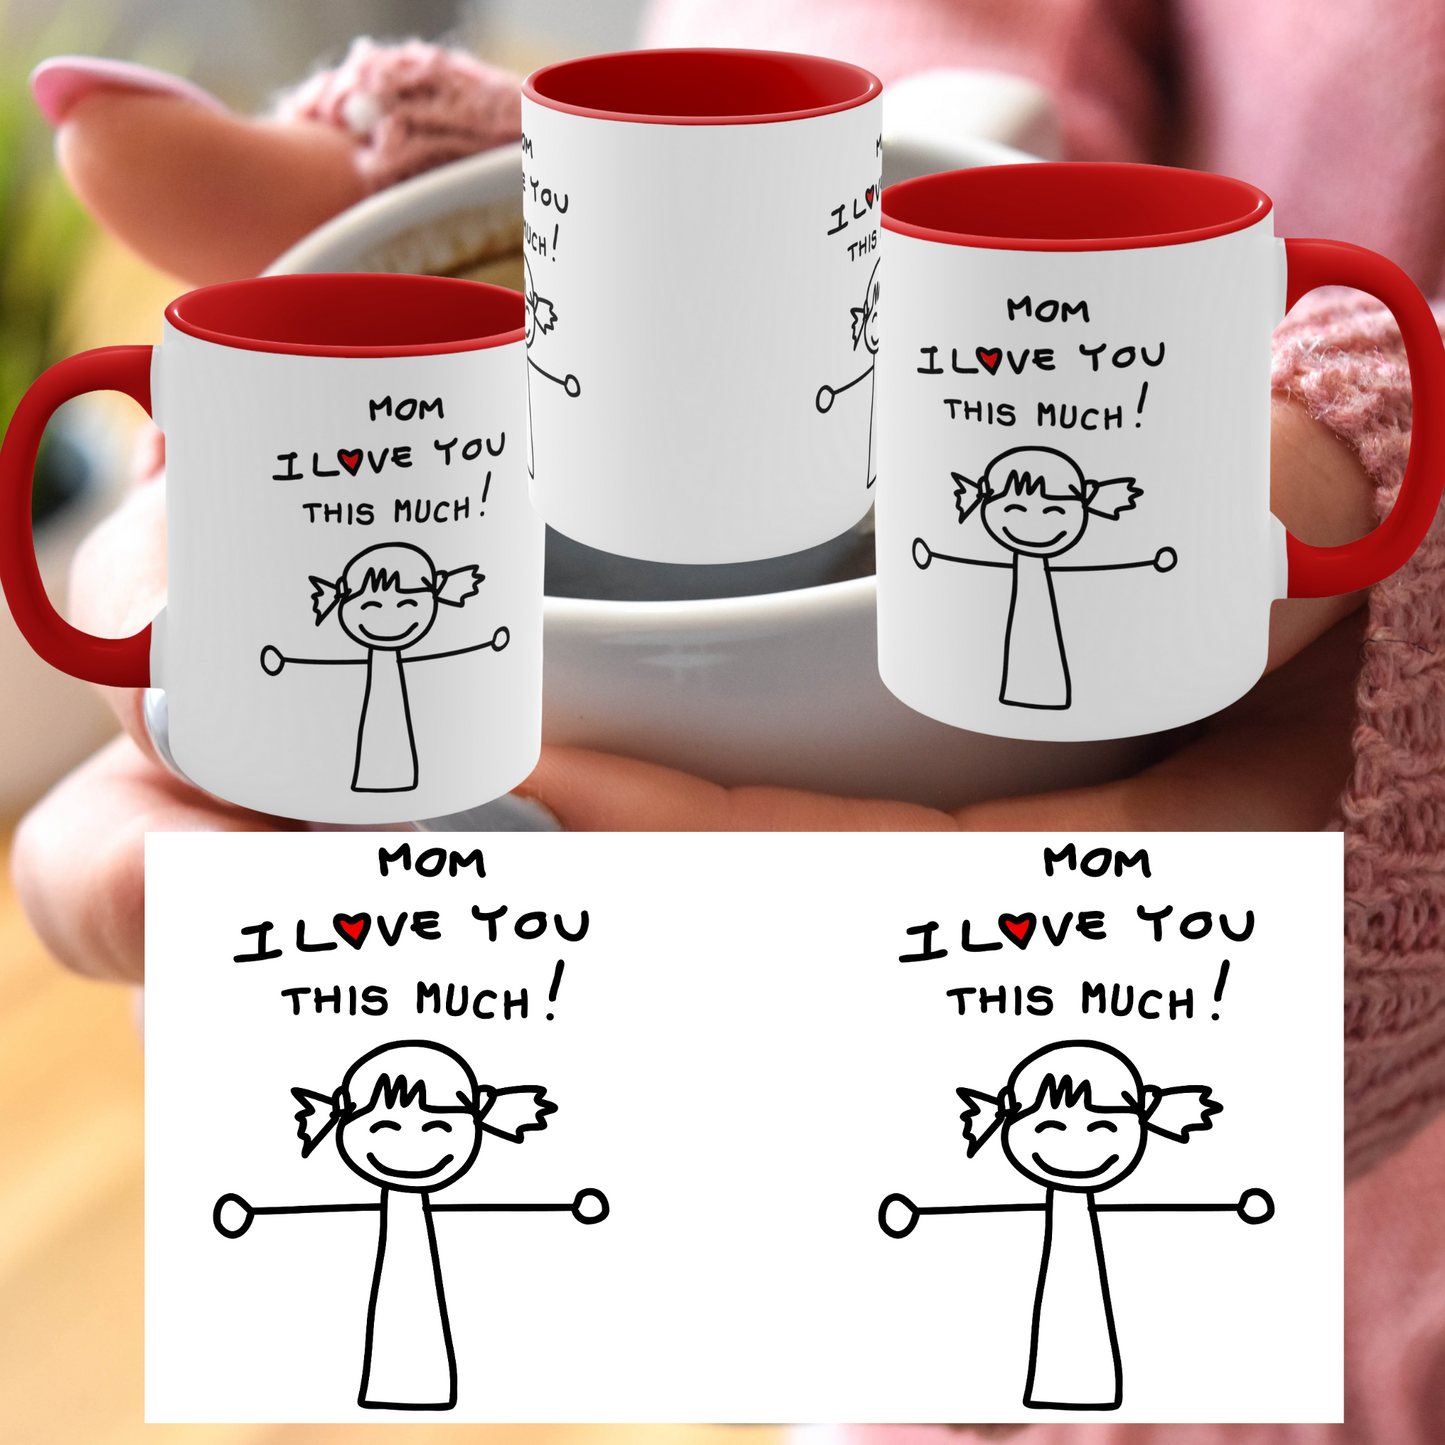 Forever Love Mug: I love you so much, Mom